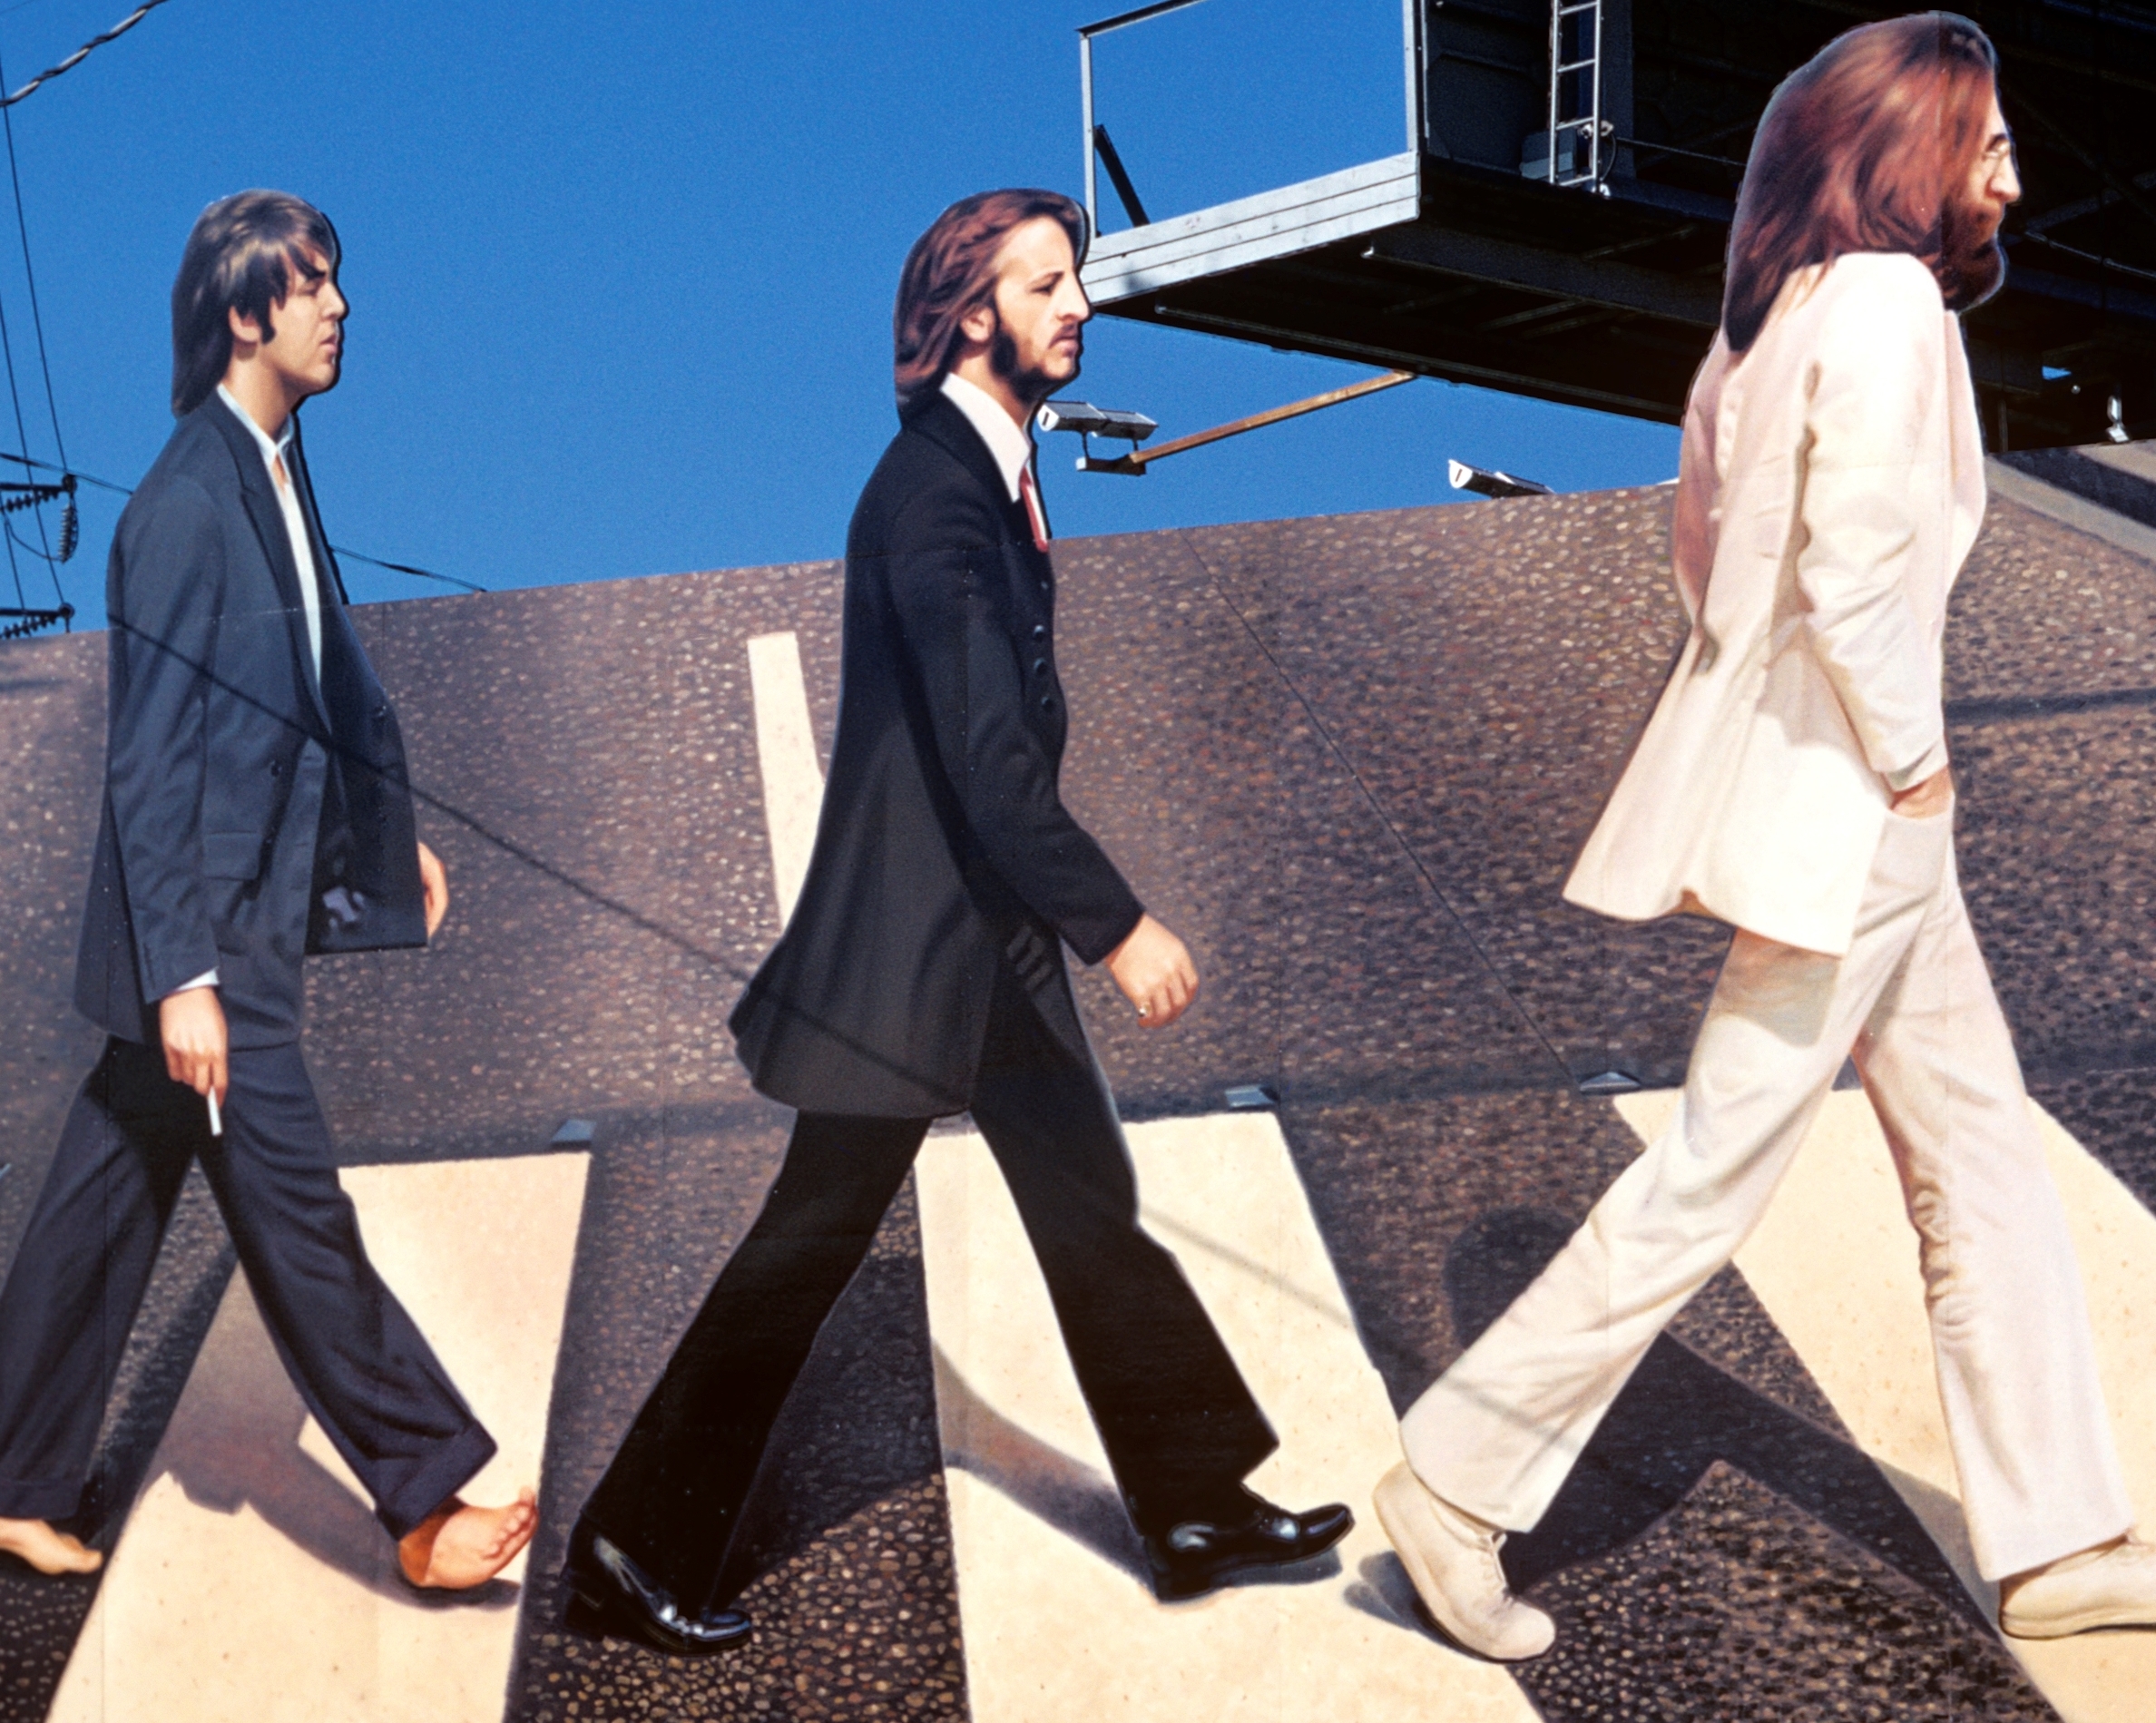 Paul McCartney, Ringo Starr, and John Lennon on a billboard advertising The Beatles' 'Abbey Road'